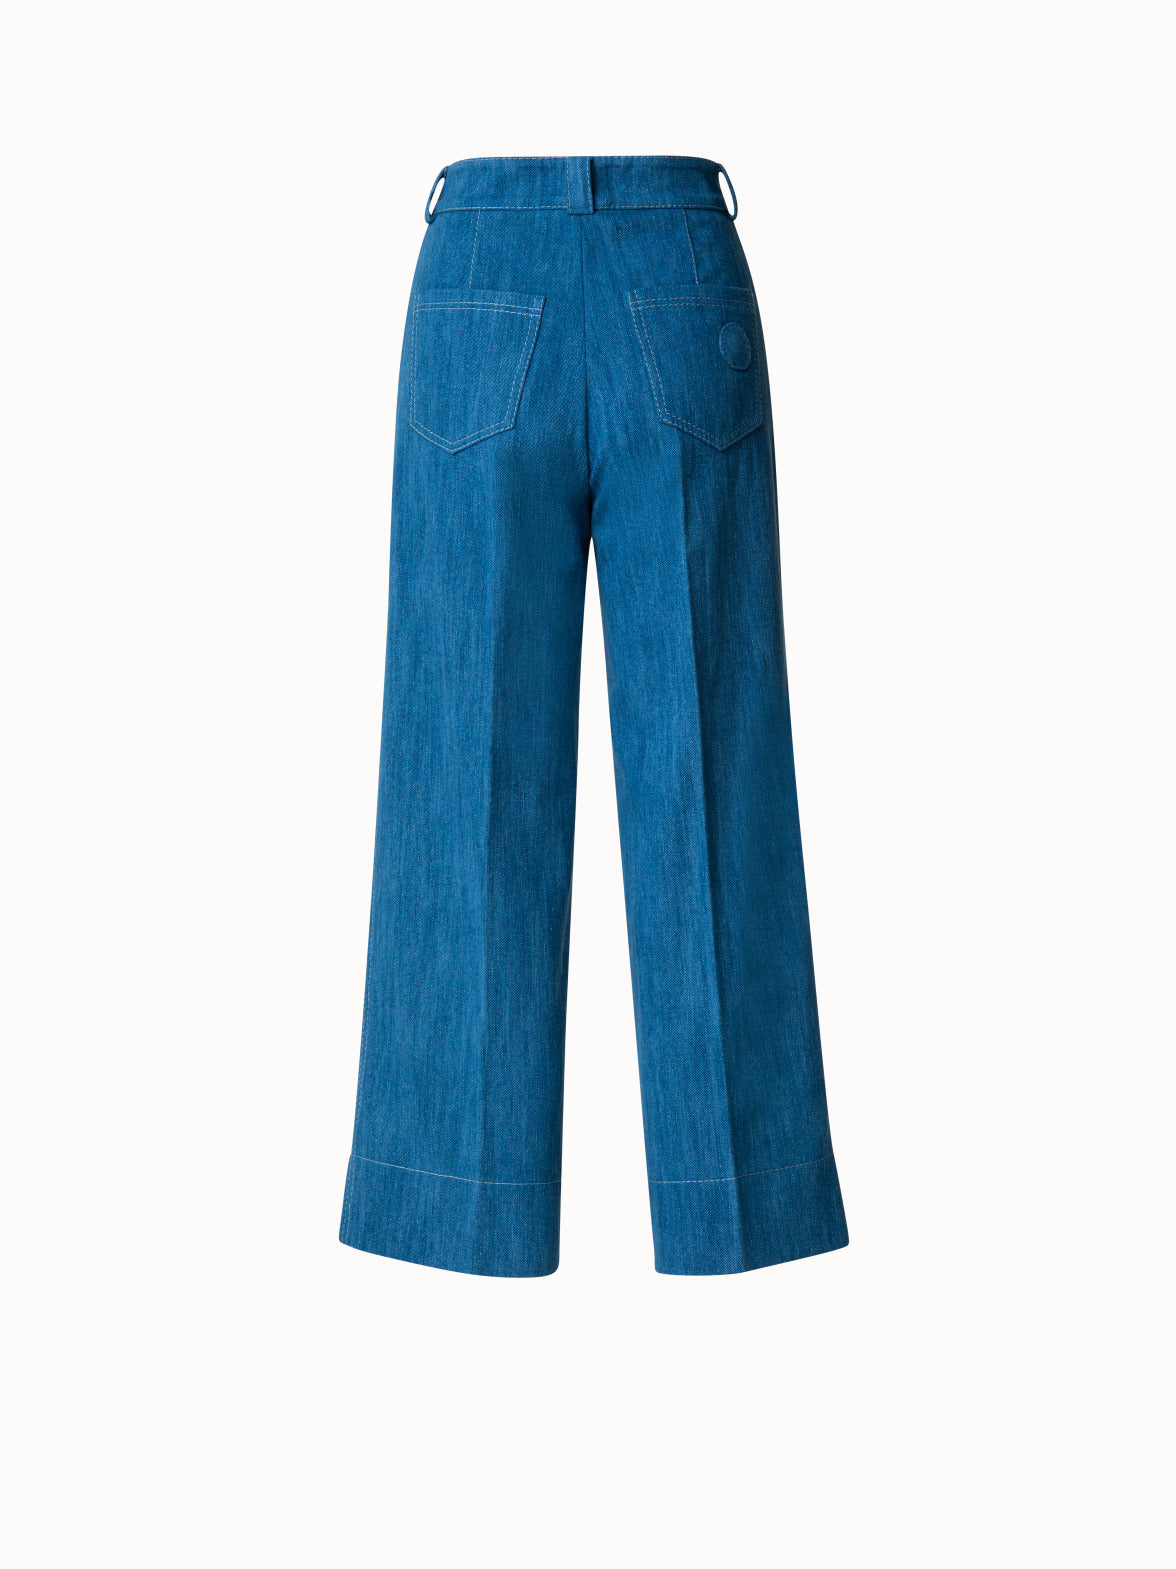 Designer Sky Blue Stretch Skinny Jeans For Men Elastic Jumpstart Scratch  Resistant Denim Pencil Pants For Streetwear Fashion Style #230824 From  Jin01, $22.31 | DHgate.Com